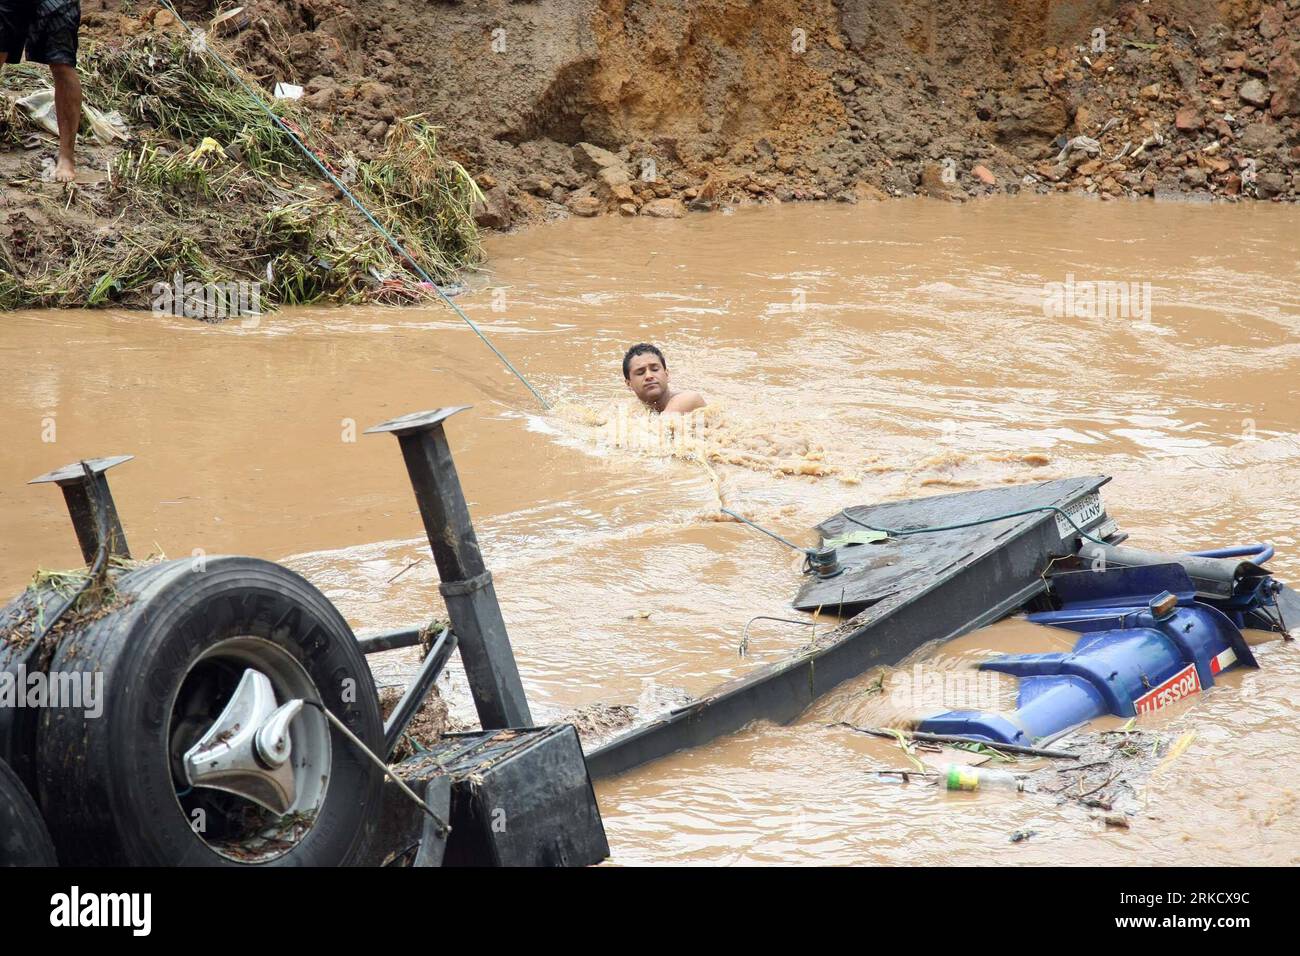 Bildnummer: 54821607  Datum: 15.01.2011  Copyright: imago/Xinhua (110115) -- NOVA FRIBURGO, Jan. 15, 2011 (Xinhua) -- A man tries to reach a truck in the flood in Nova Friburgo, Brazil, Jan. 15, 2011. According to the local government, the death toll caused by this week s heavy rains and mudslide that hit Brazil s Rio de Janeiro state has reached at least 550. (Xinhua/Agencia Estado) (BRAZIL OUT) (wjd) BRAZIL-MUDSLIDE-FLOOD PUBLICATIONxNOTxINxCHN Gesellschaft Naturkatastrophe Flut Überschwemmung premiumd kbdig xmk 2011 quer o0 Zerstörung, Schäden, Flutopfer    Bildnummer 54821607 Date 15 01 20 Stock Photo